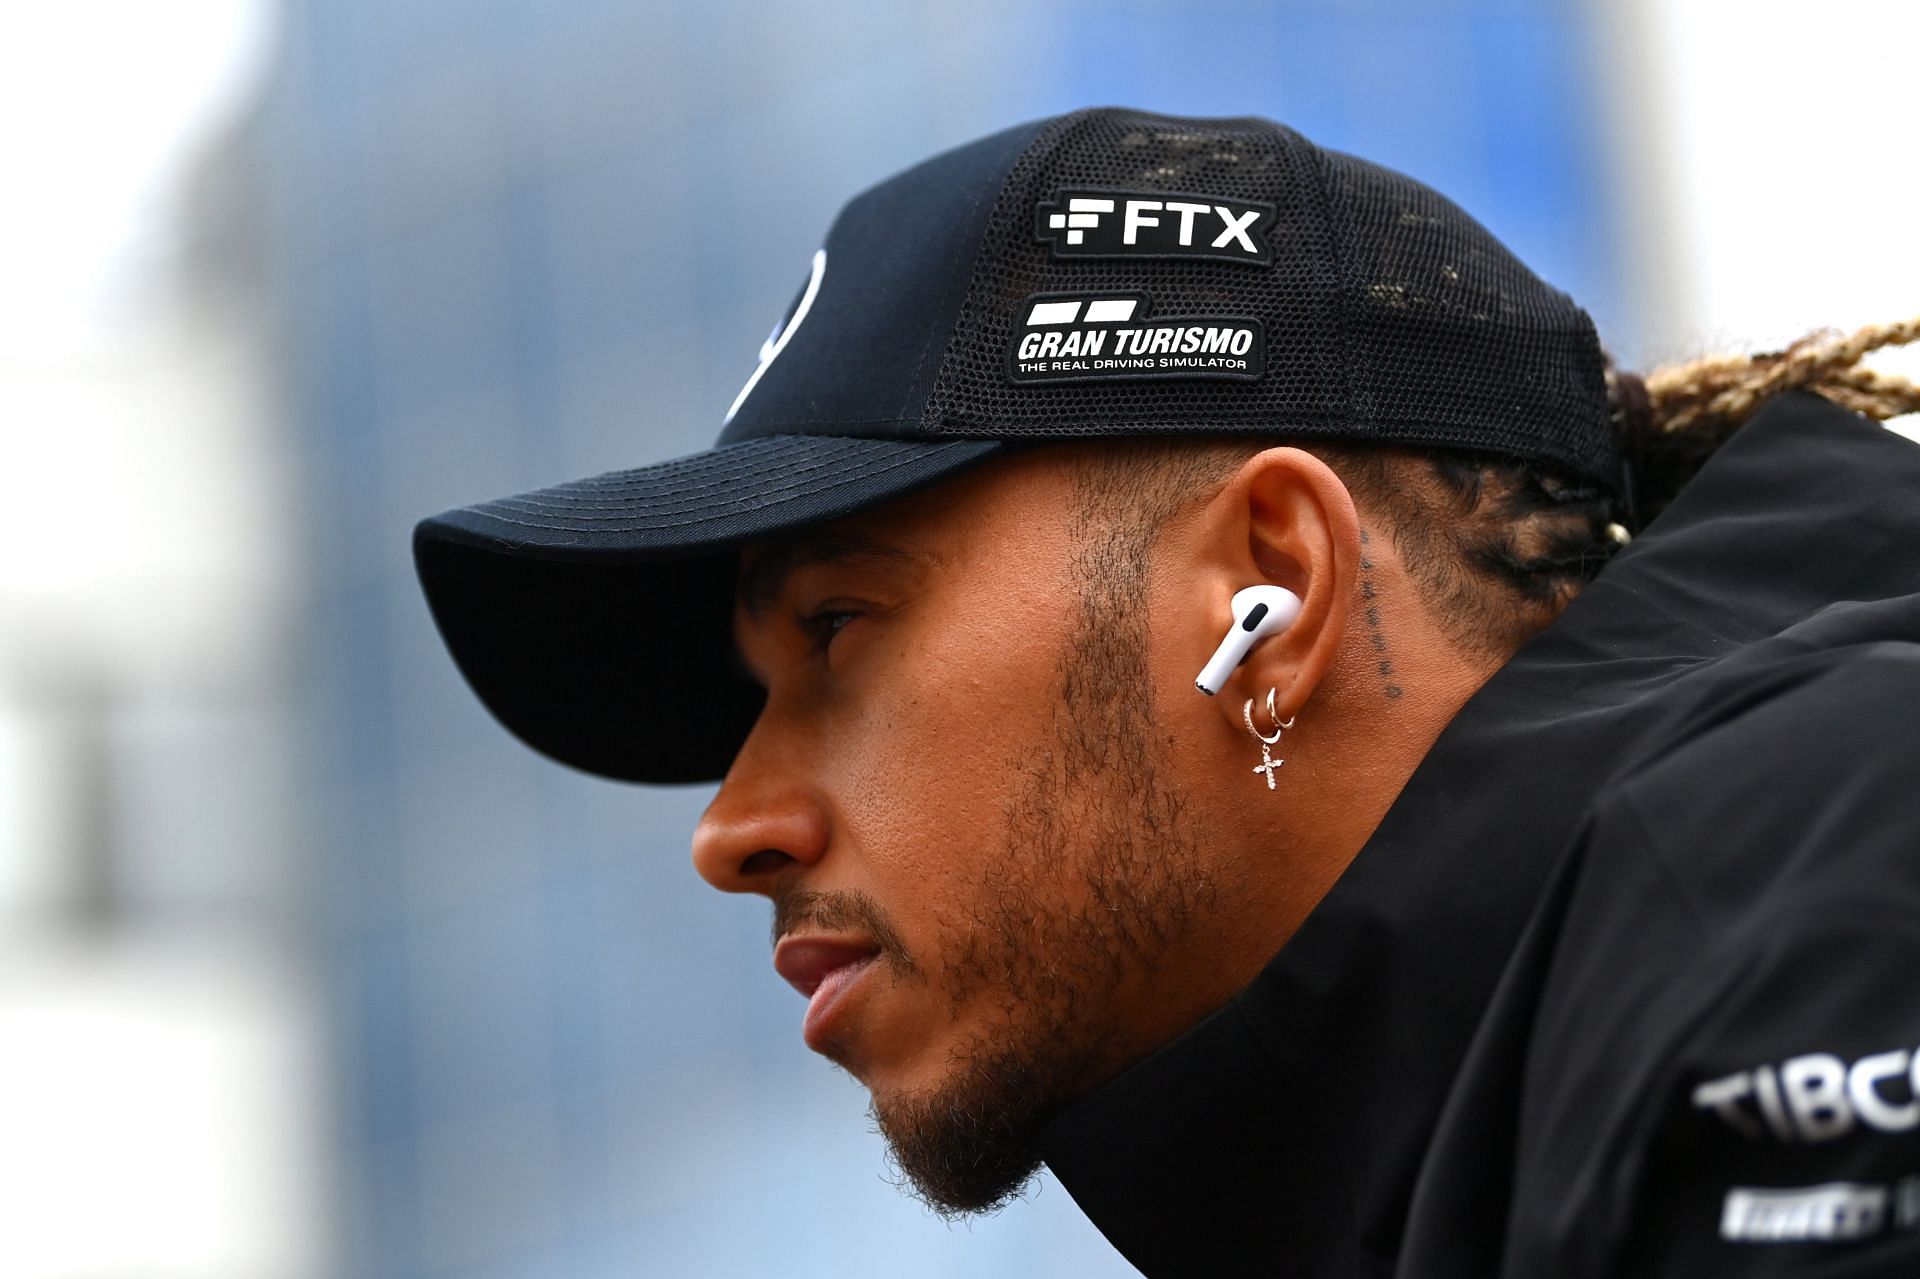 F1 Grand Prix of Hungary - Lewis Hamilton arrives at Hungaroring